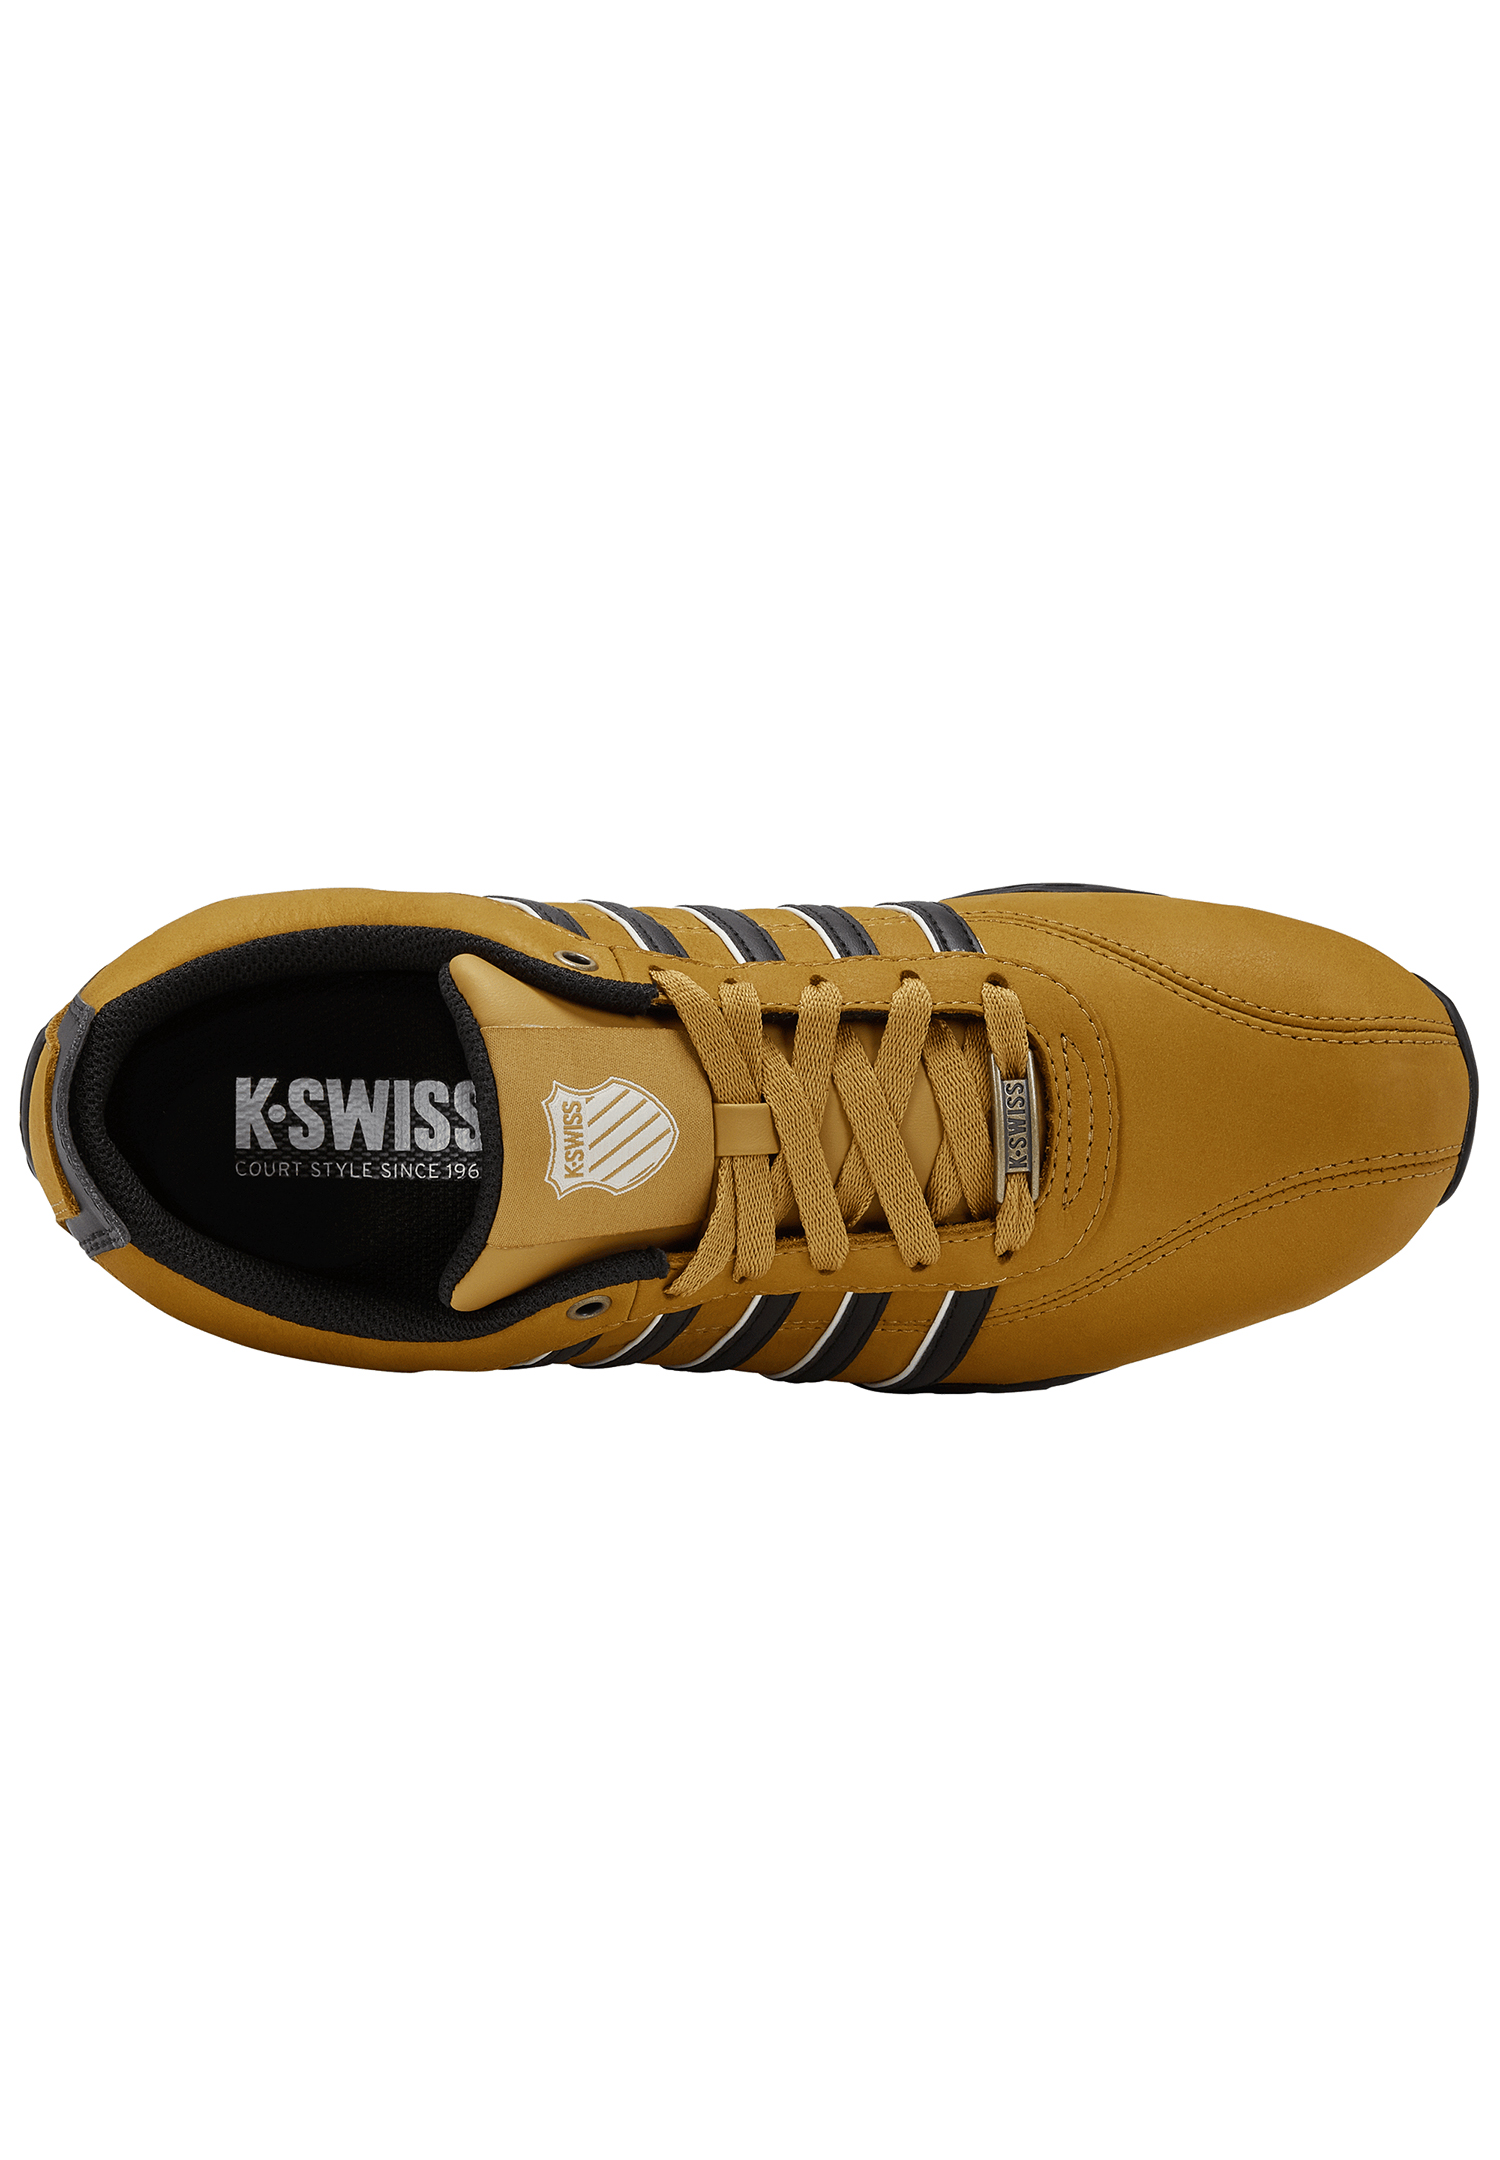 K-SWISS Arvee 1.5 Herren Sneaker Sportschuhe 02453-748-M braun